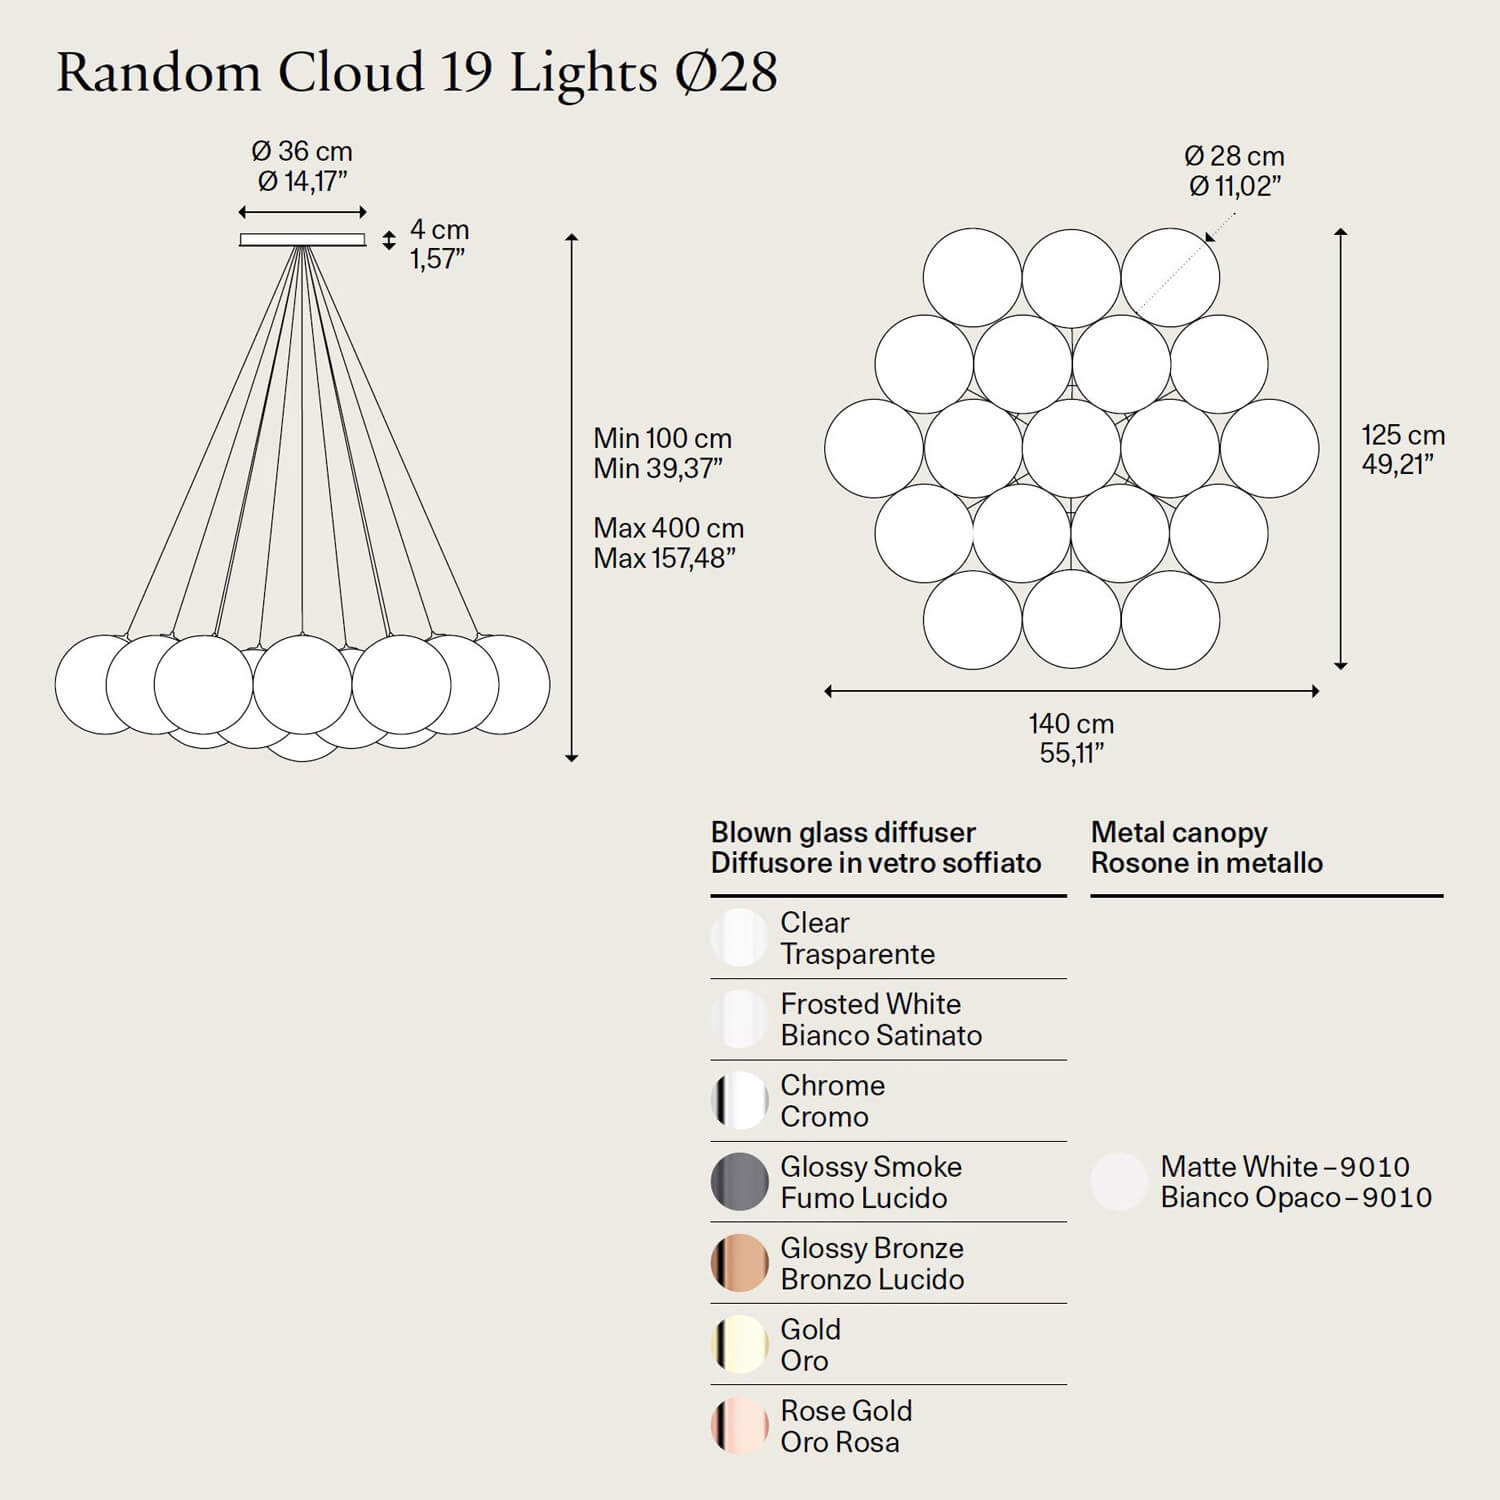 Random Cloud 19 Lights Ø28 by Lodes